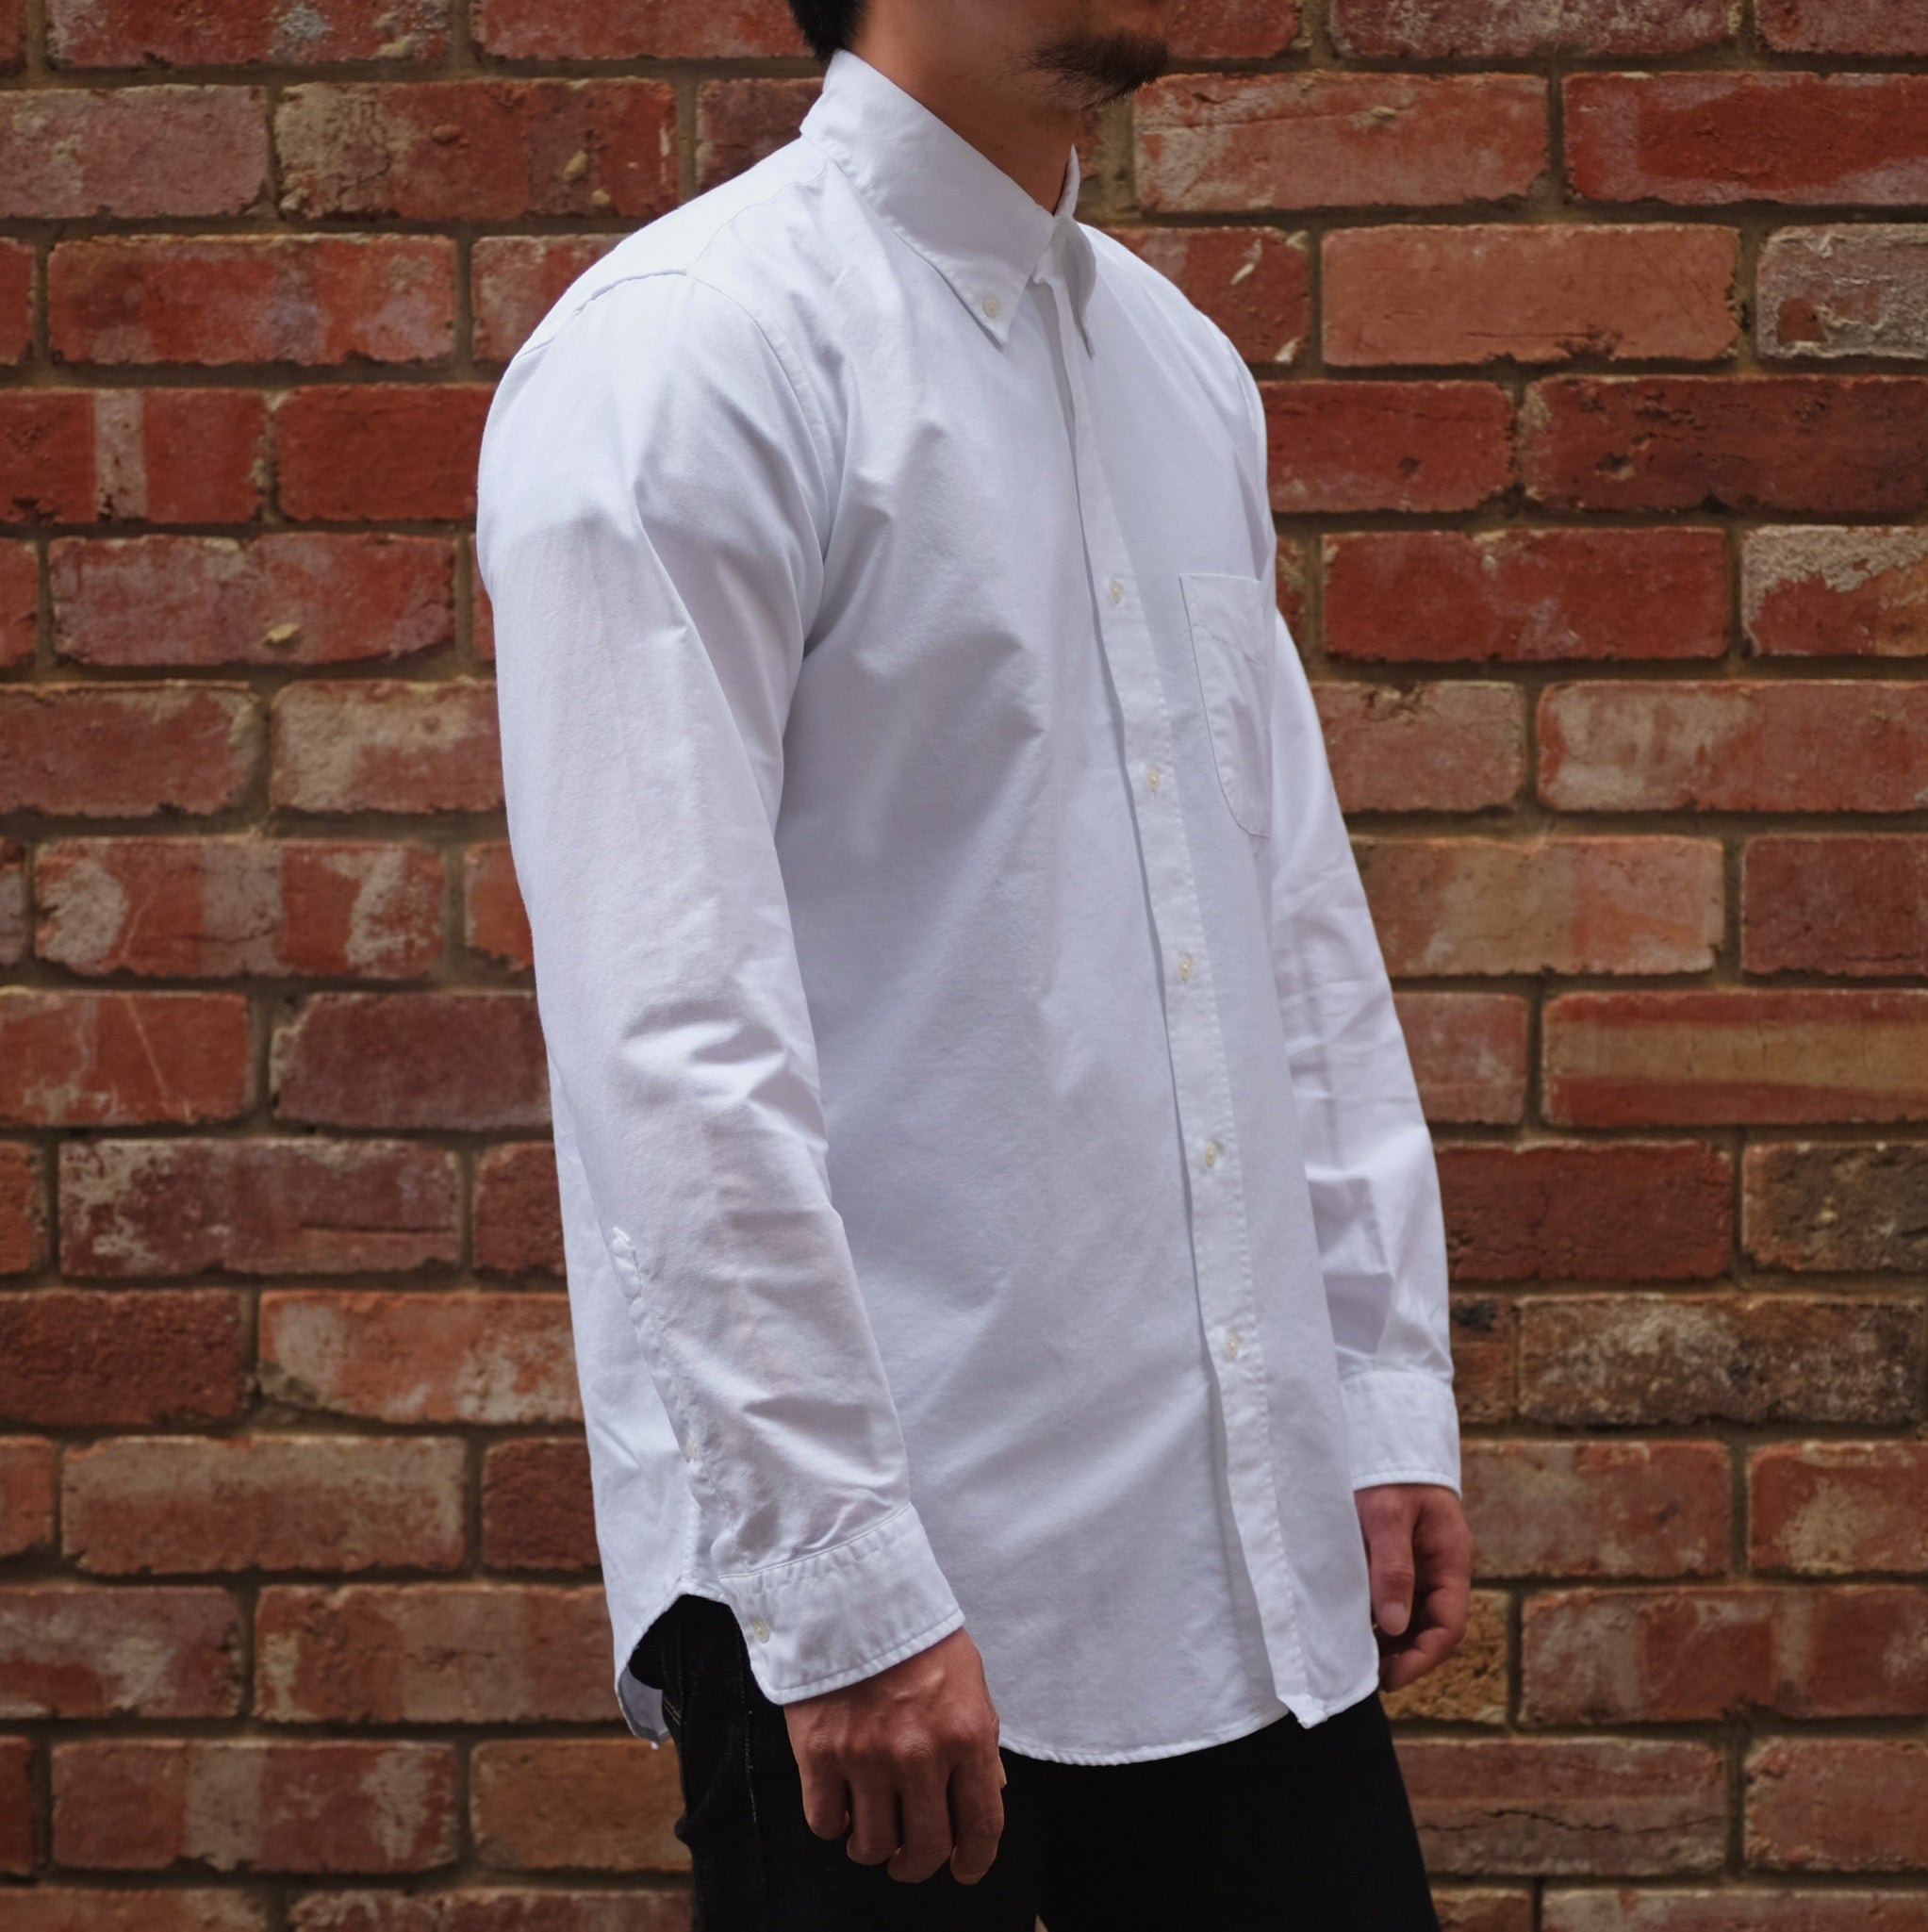 Oxford Shirt / White